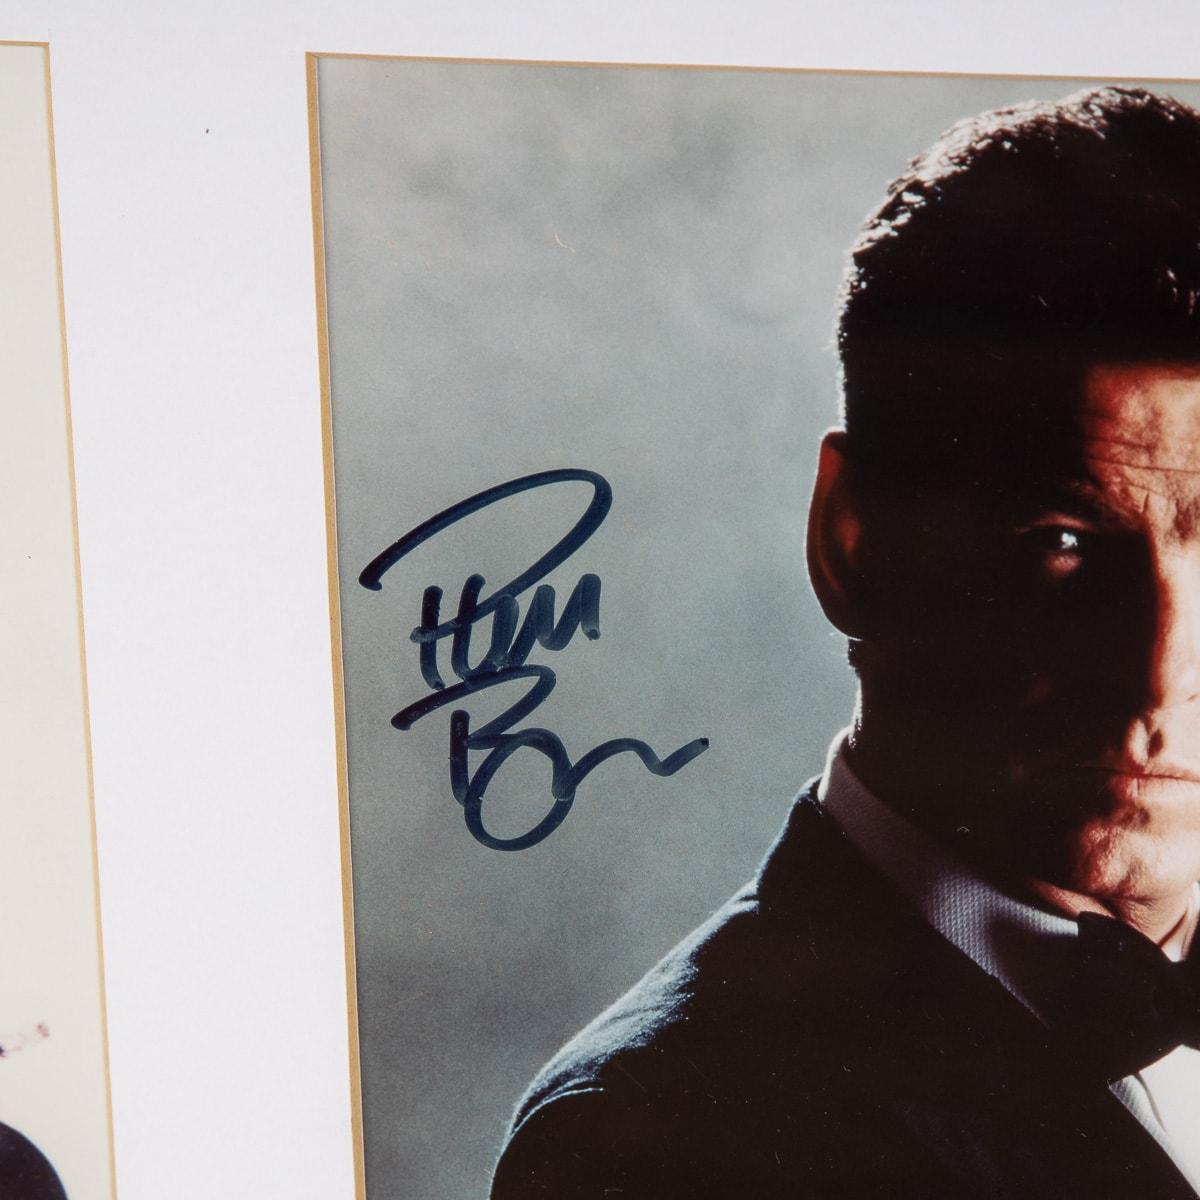 James Bond 007 - Connery, Lazenby, Moore, Dalton, Brosnan, Craig Signatures 8